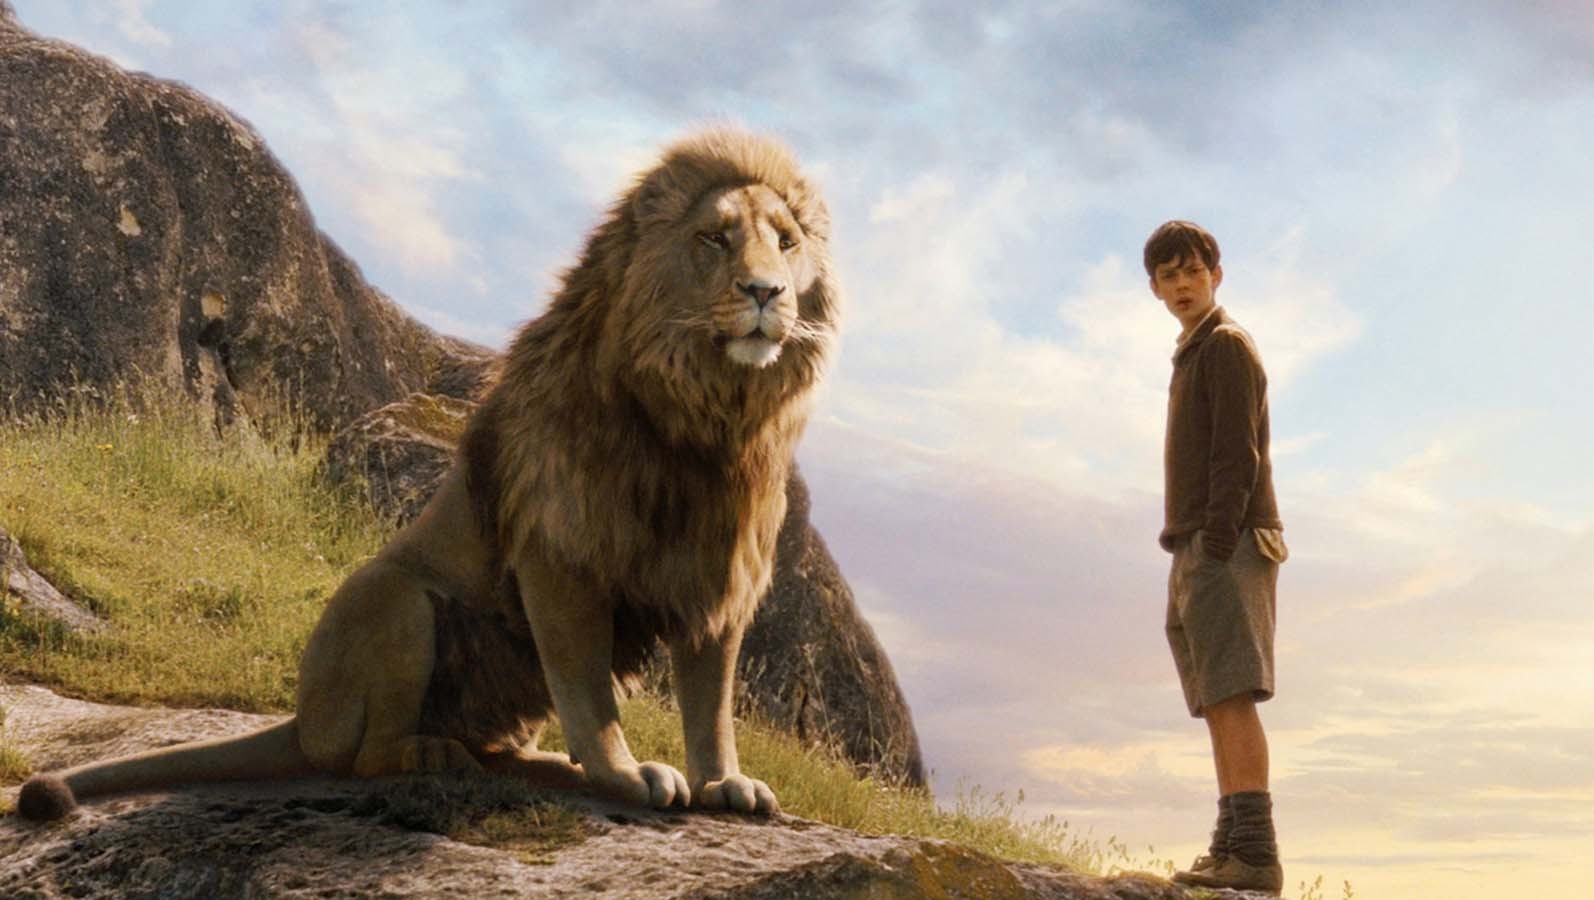 People 1594x900 movies The Chronicles of Narnia CGI lion animals big cats children film stills